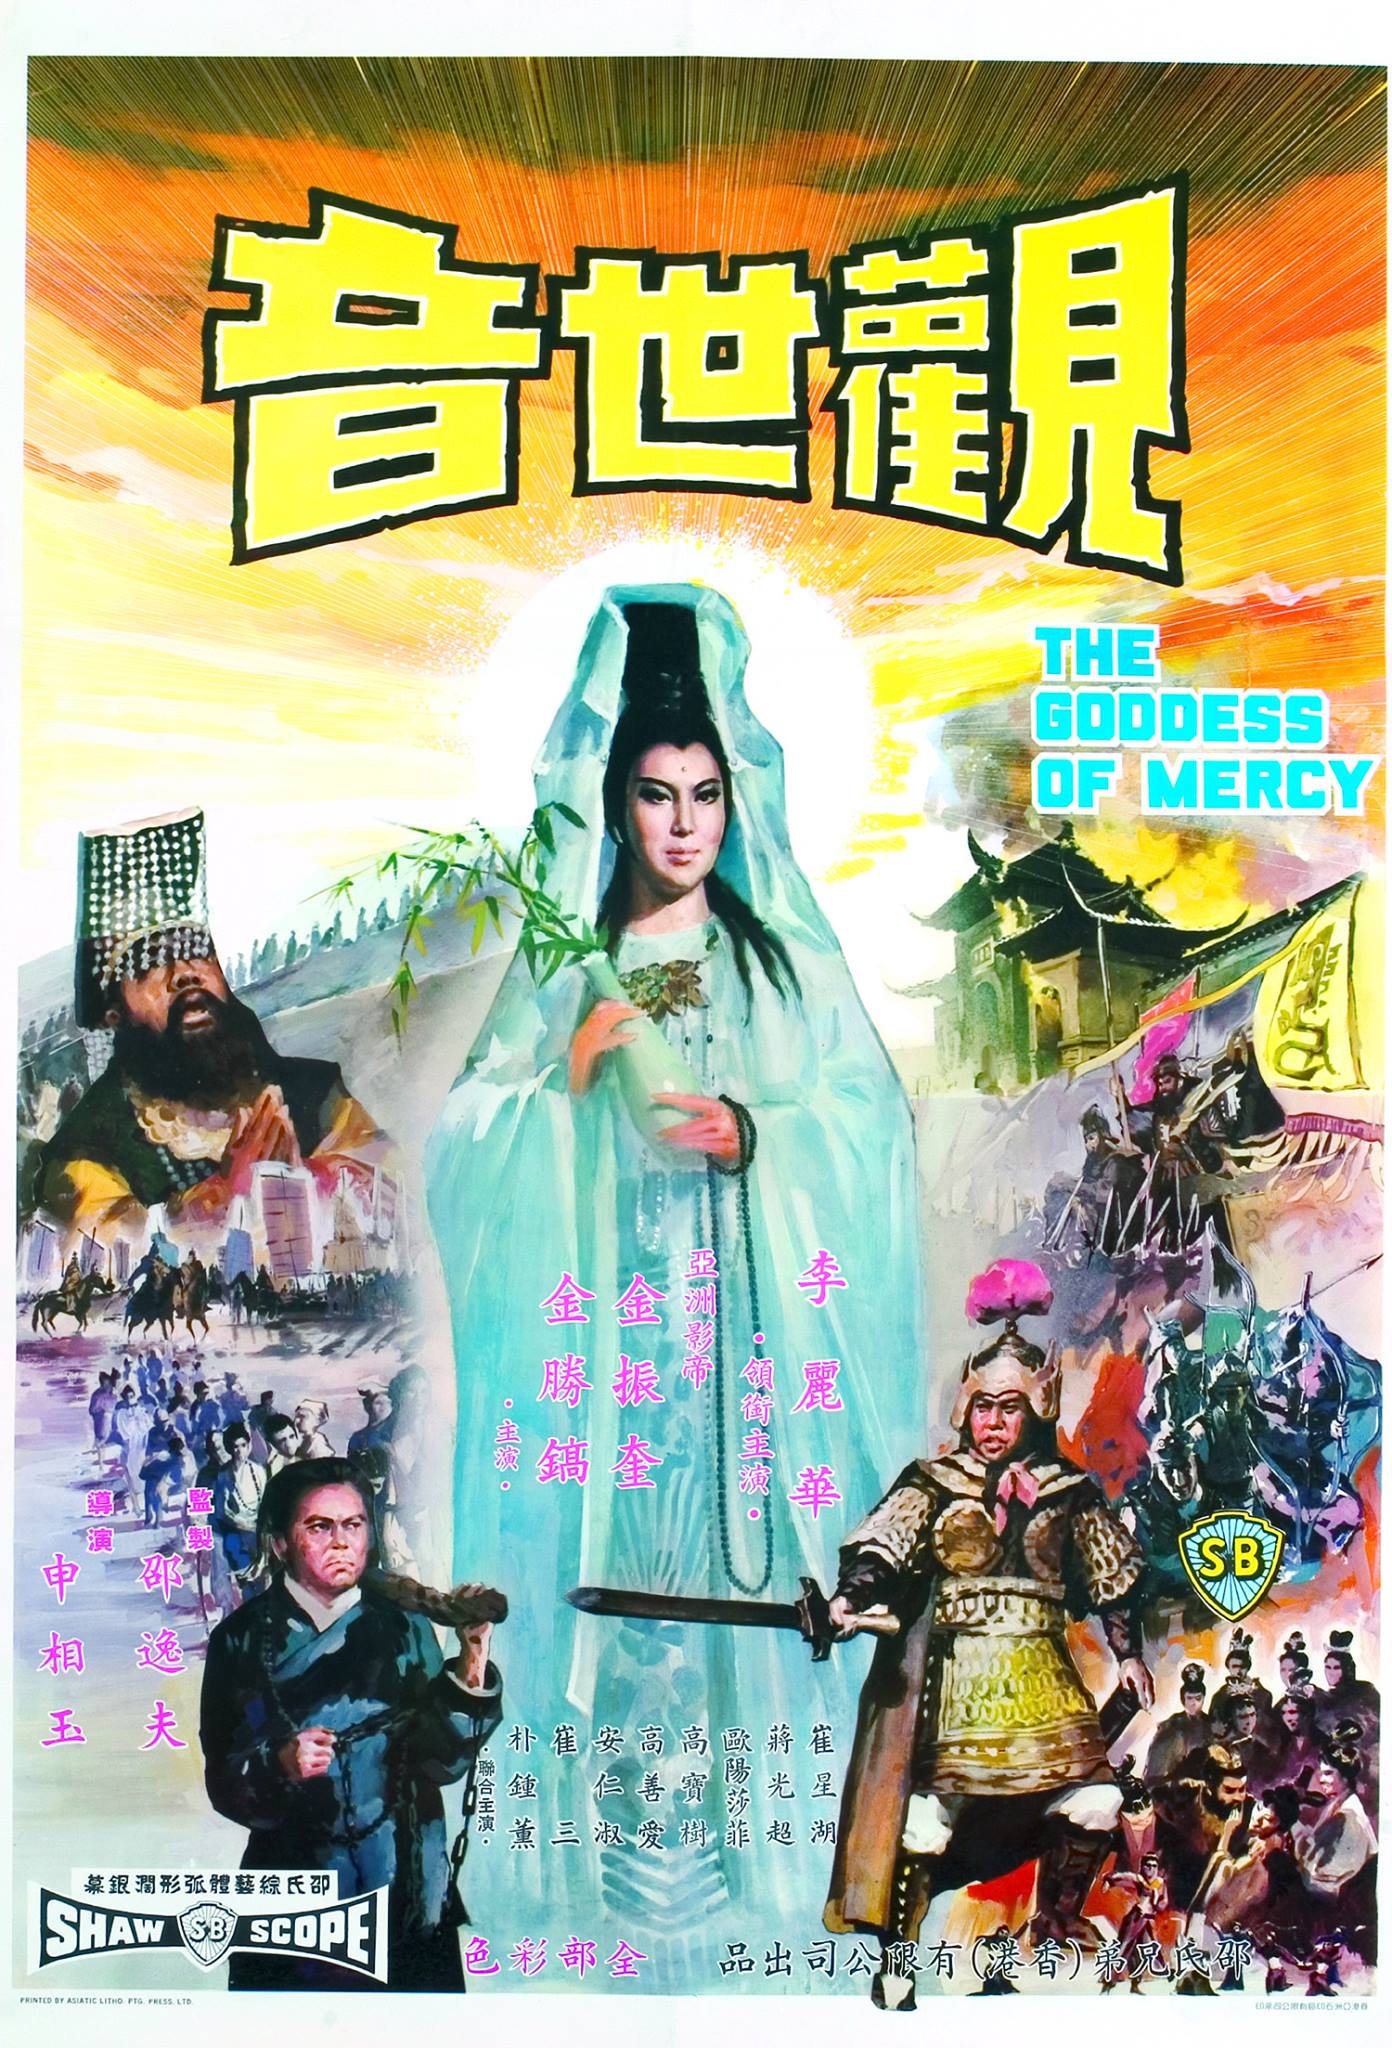 The Goddess of Mercy (1967) Screenshot 1